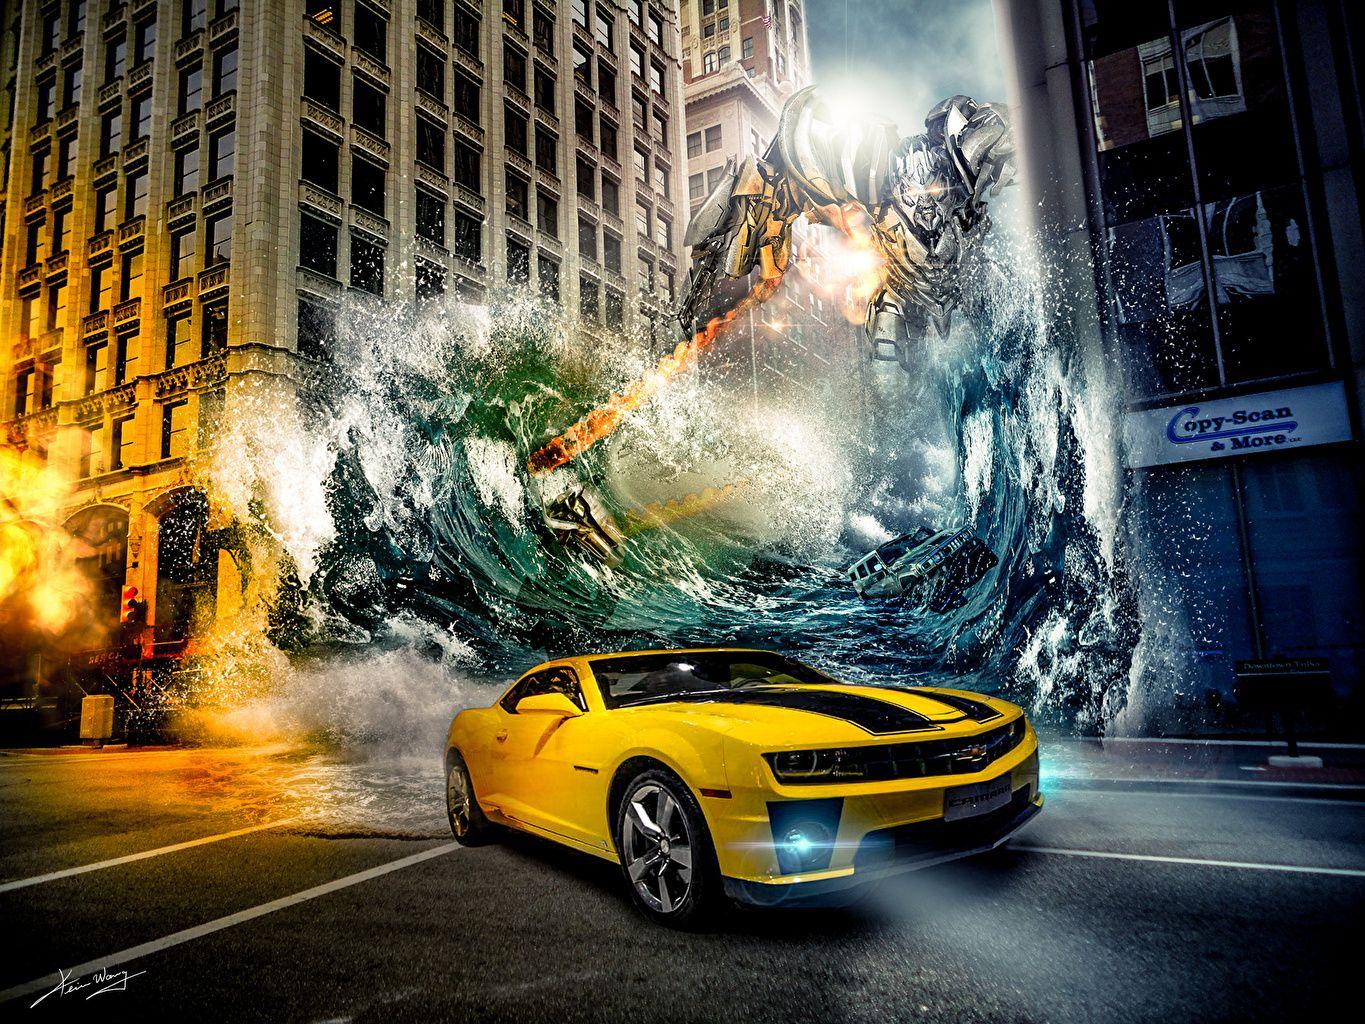 Photo Transformers Chevrolet Robot Fantasy Movies Battles